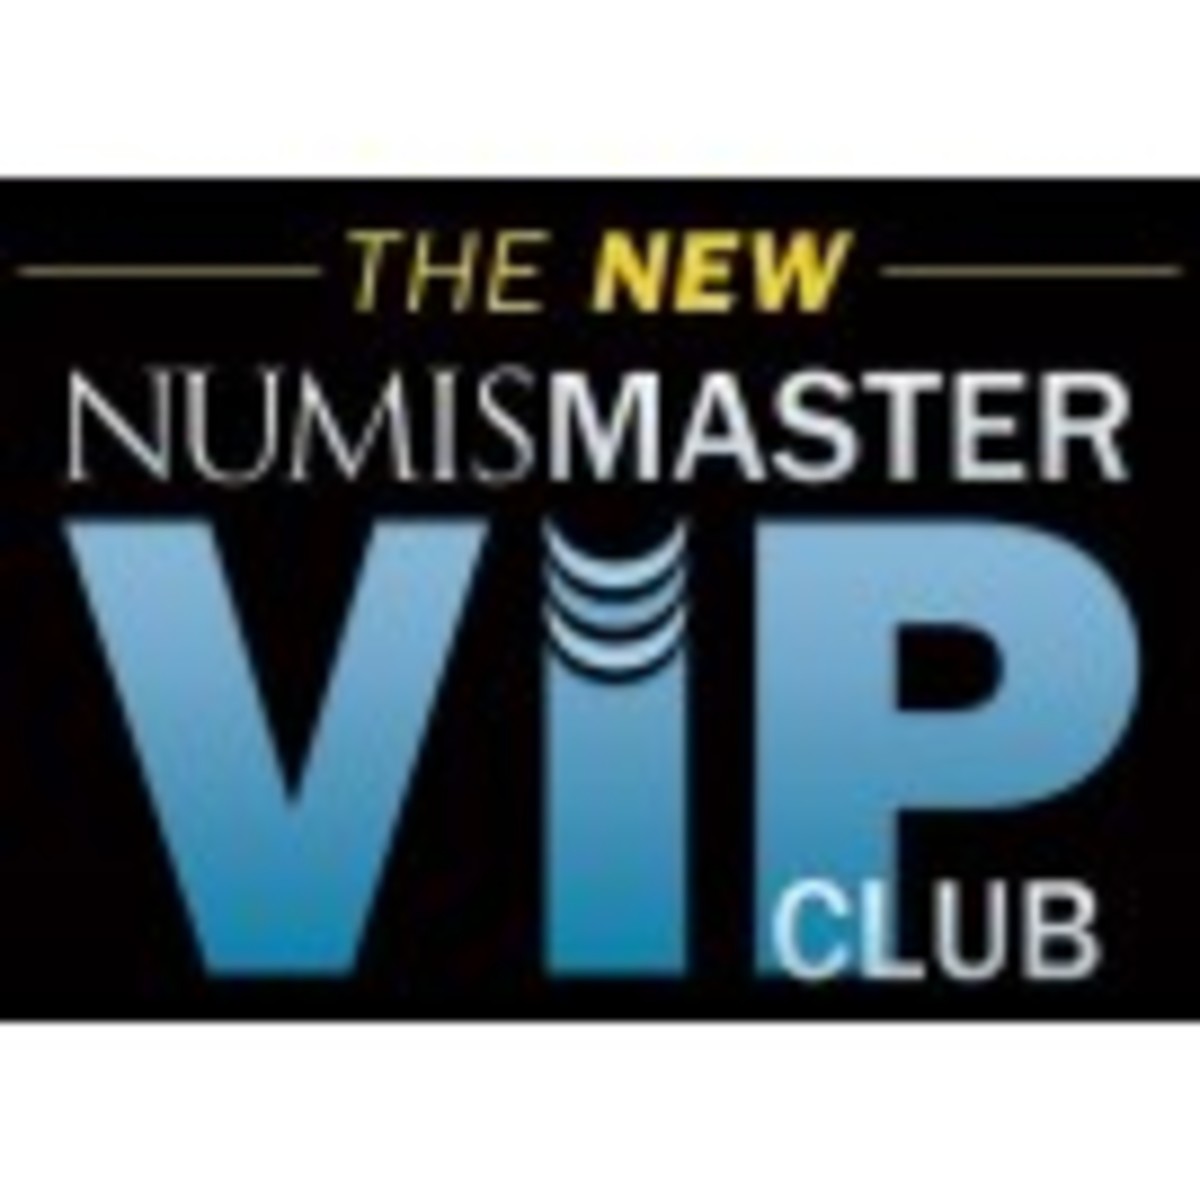 New NumisMaster VIP Club